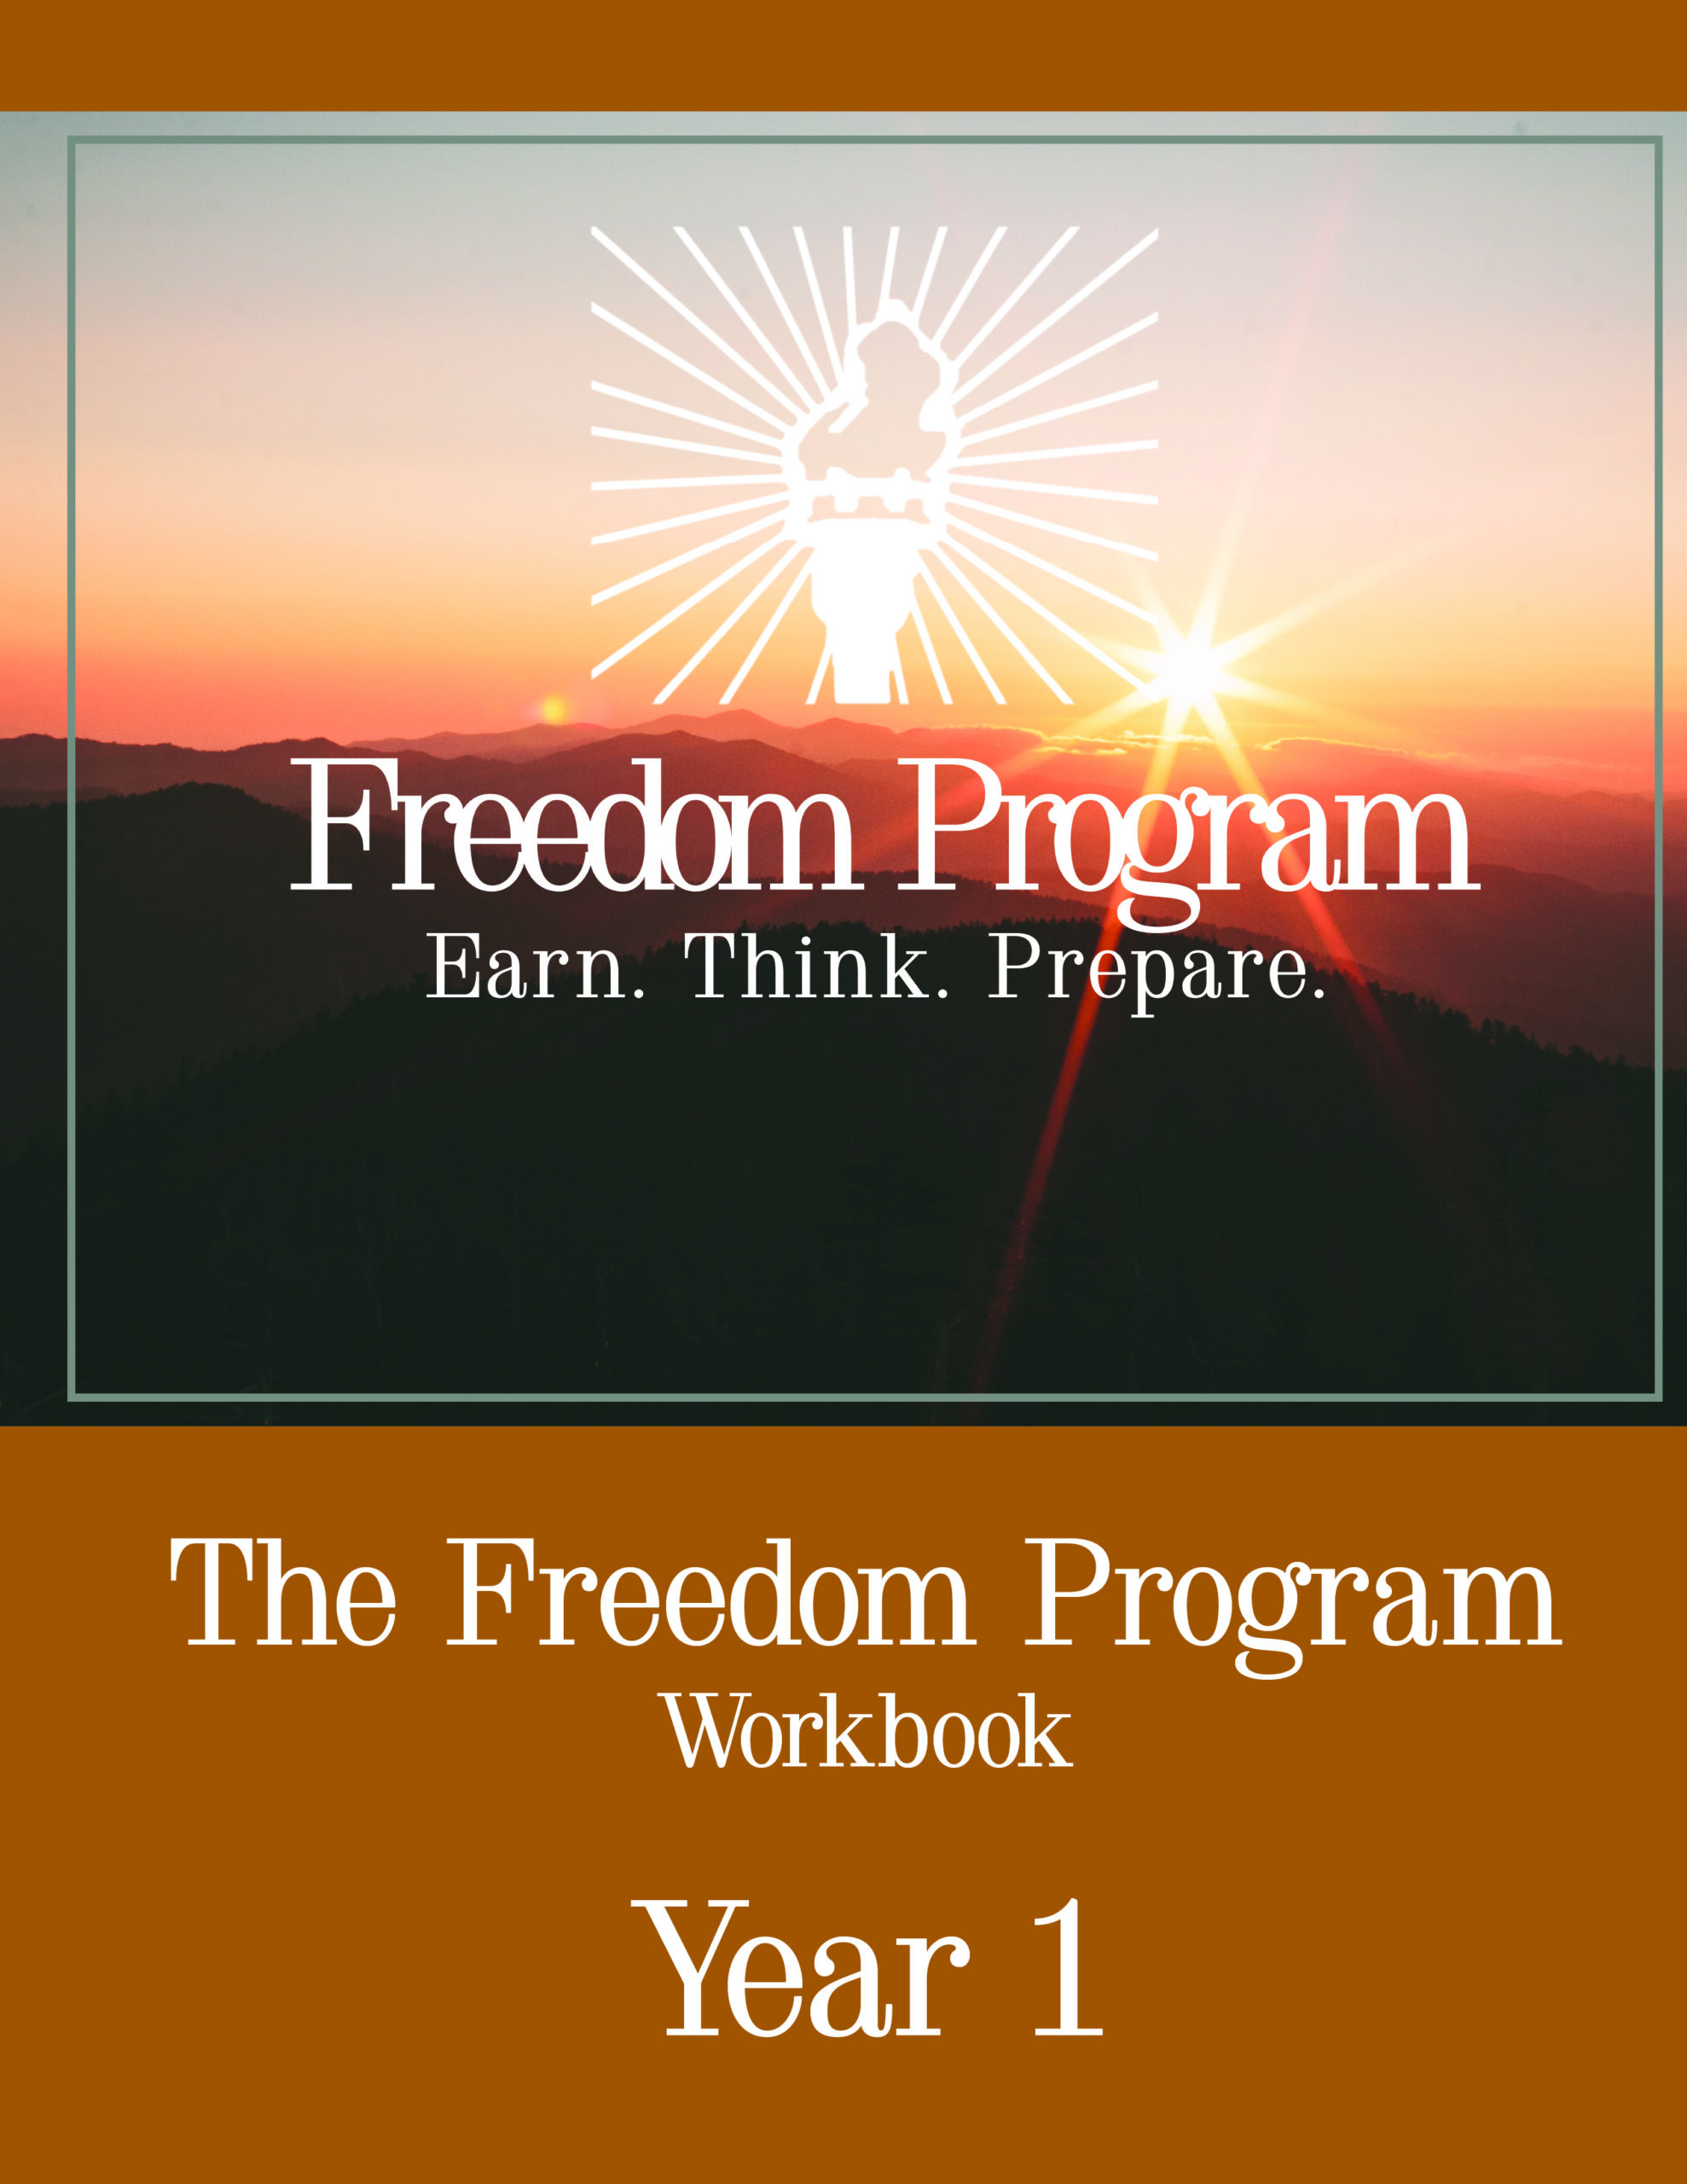 FreePro Workbook (Year 1)